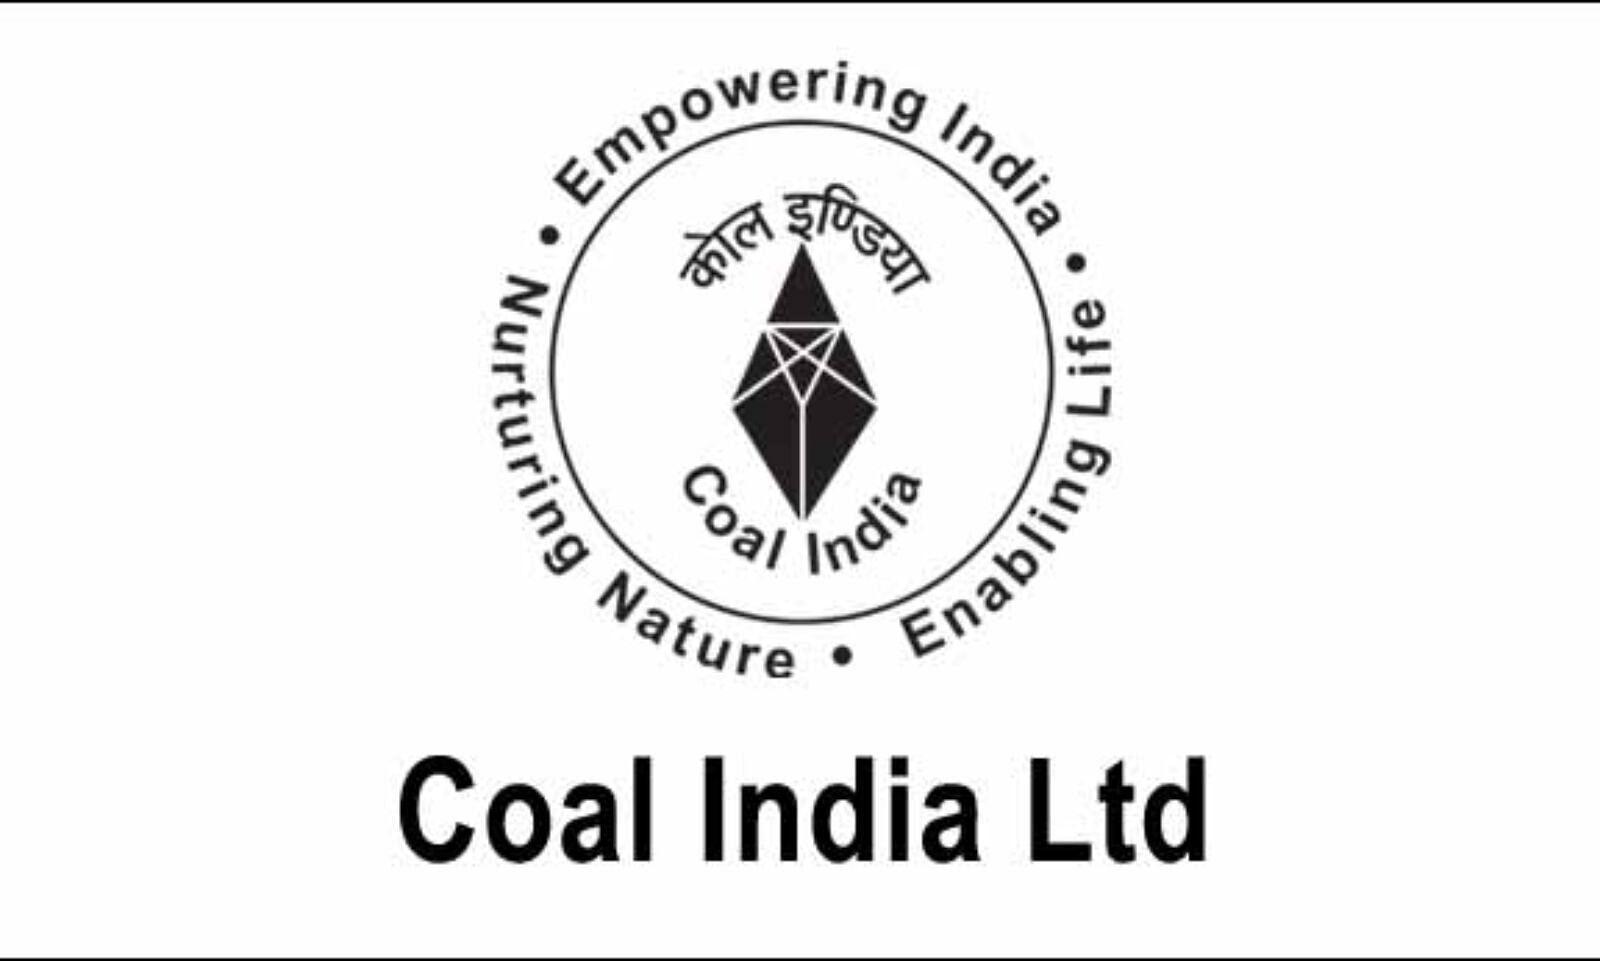 Coal India Ltd: A Comprehensive Analysis of India's Leading Coal Mining Company